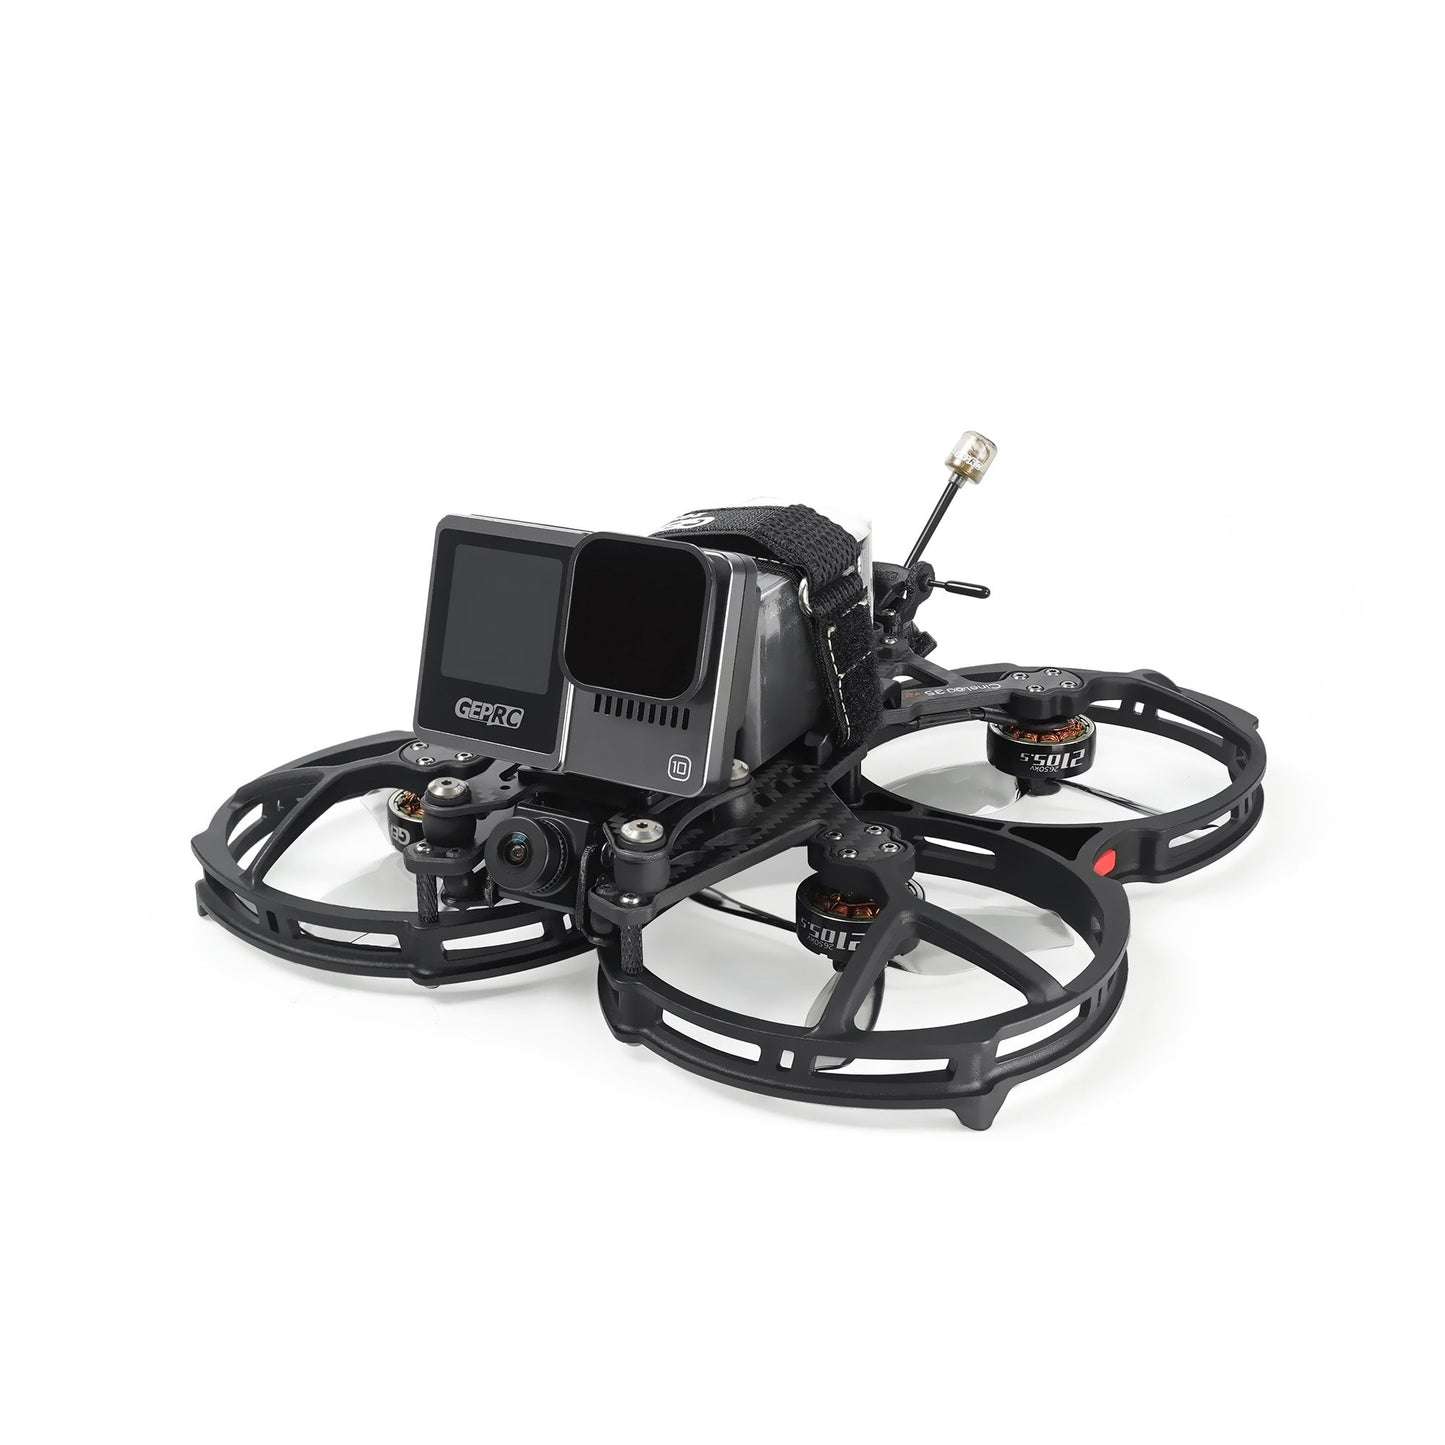 GEPRC CineLog35 V2 HD - Avatar FPV Drone OSD AT7456E Chip VTX Avatar V2 2650KV Module RC FPV Quadcopter Freestyle Drone